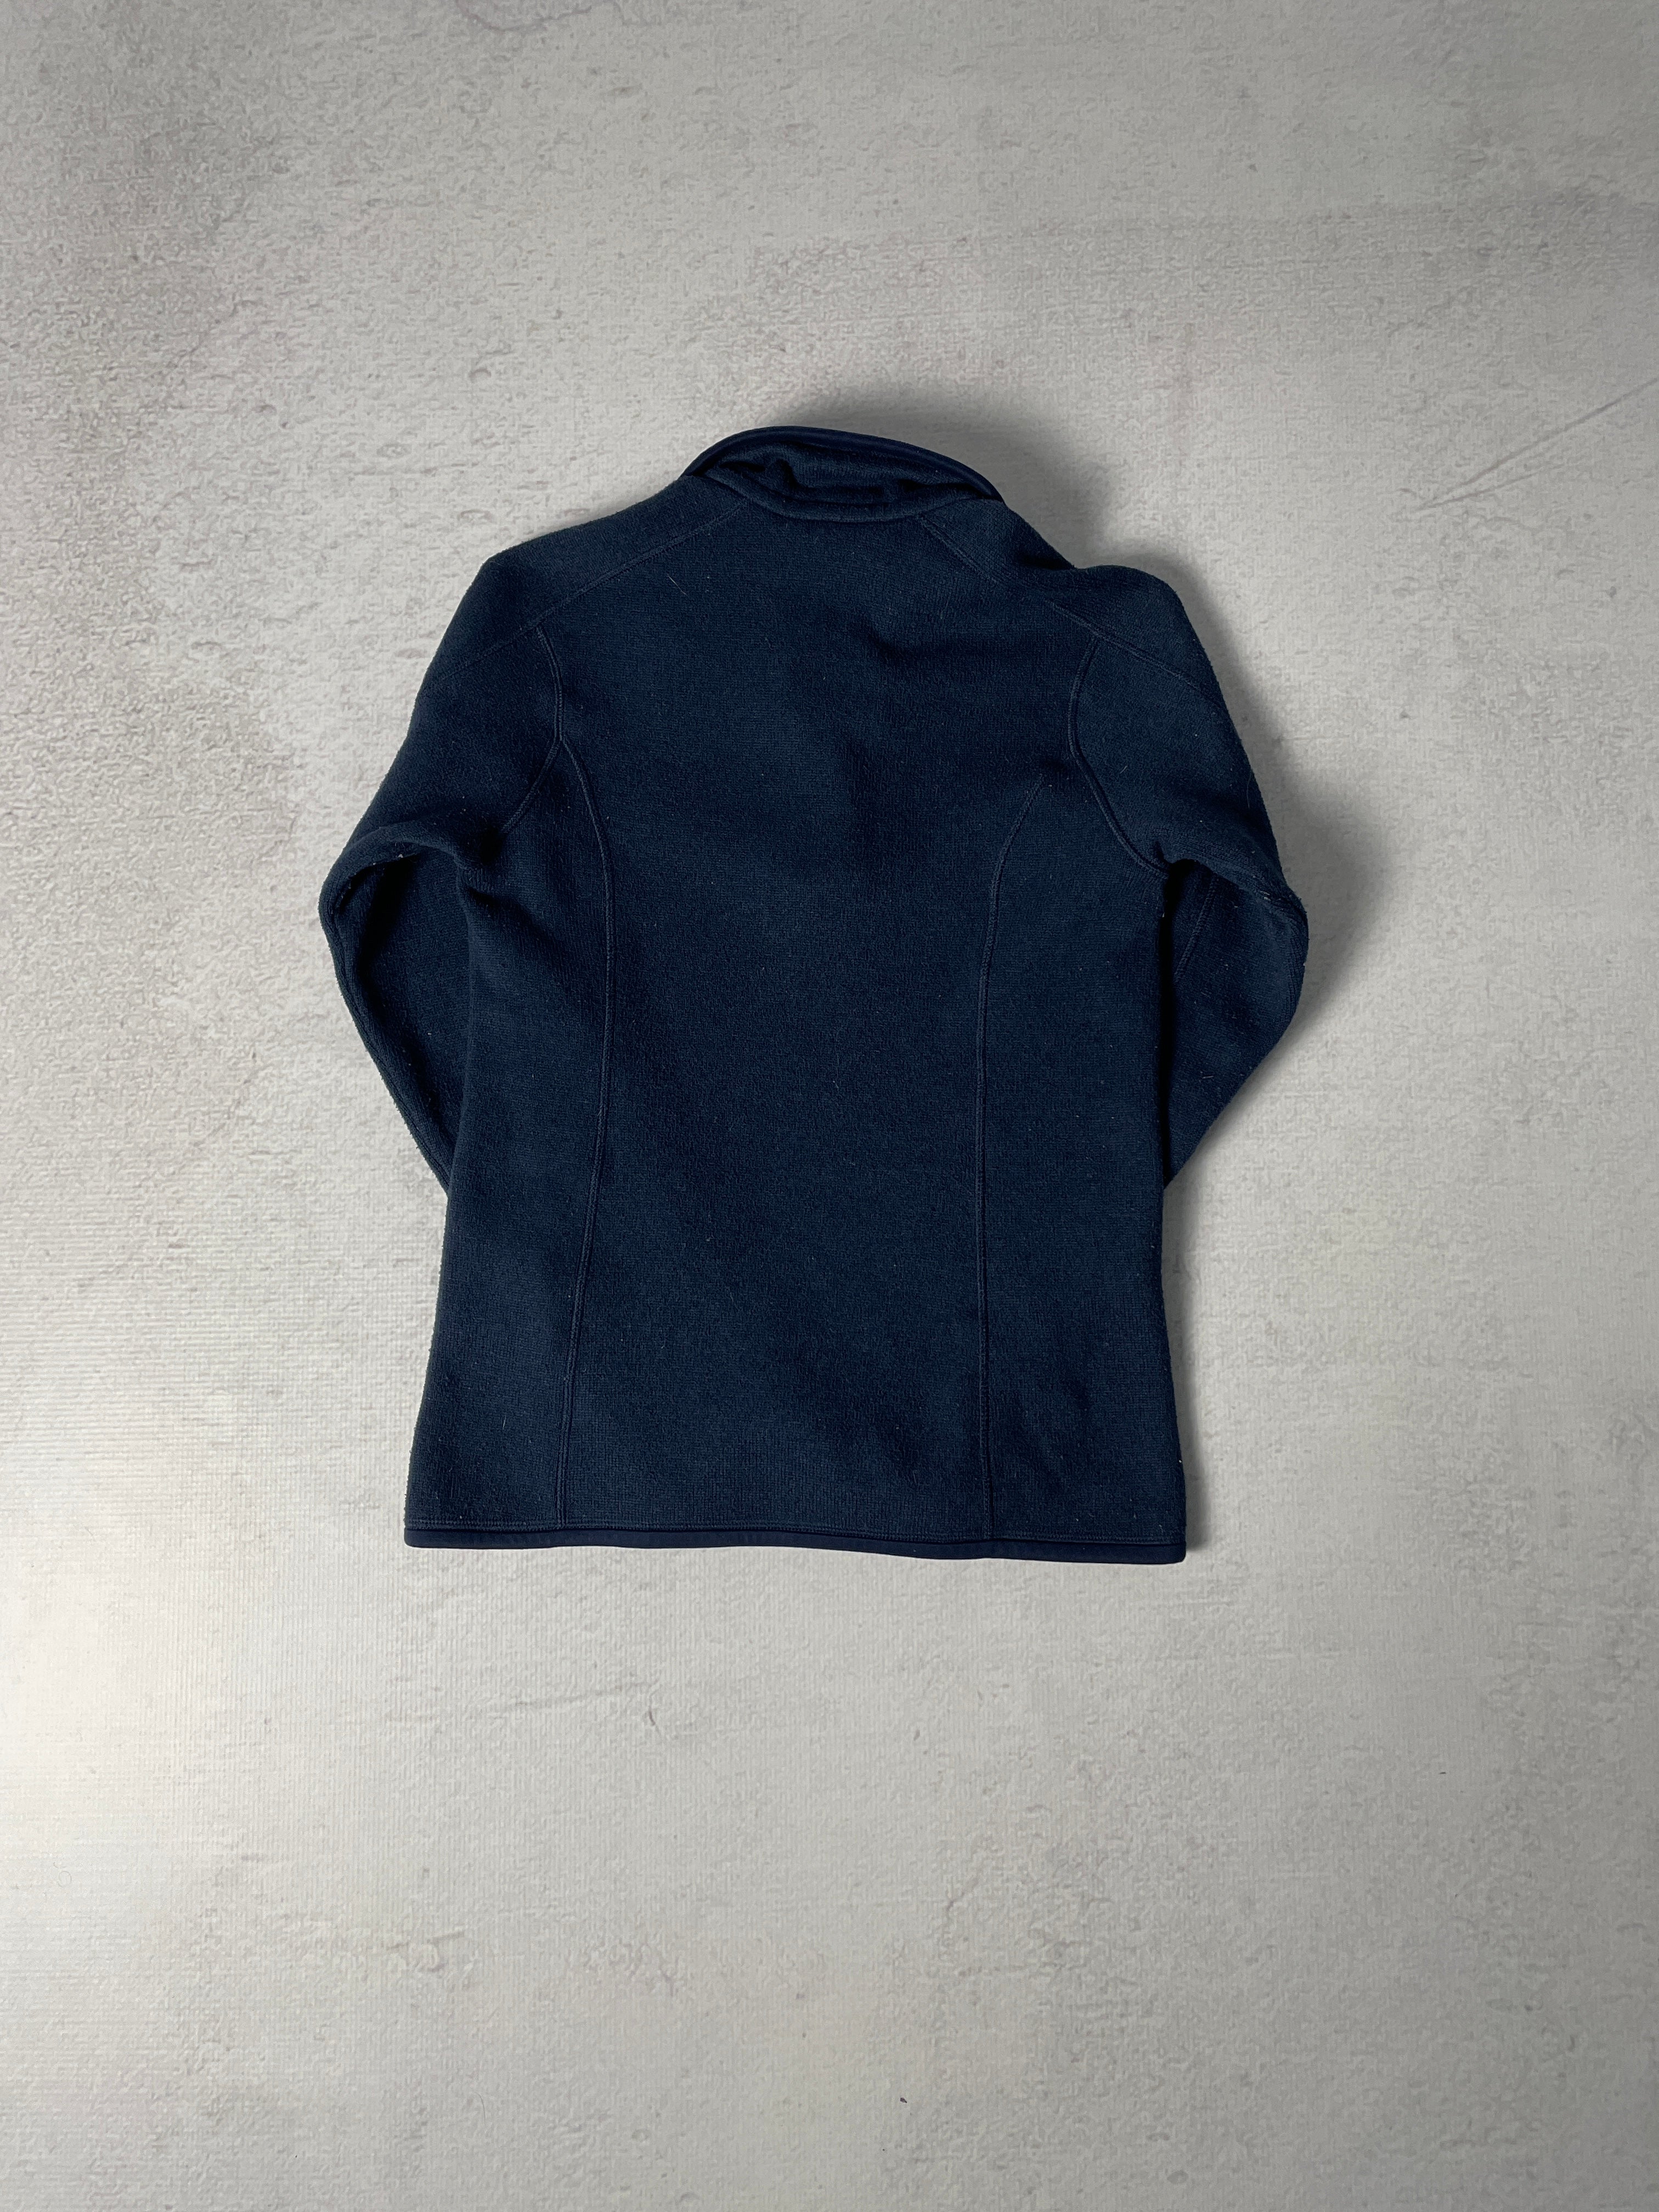 Vintage Patagonia 1/4 Zip Sweatshirt - Women's XS